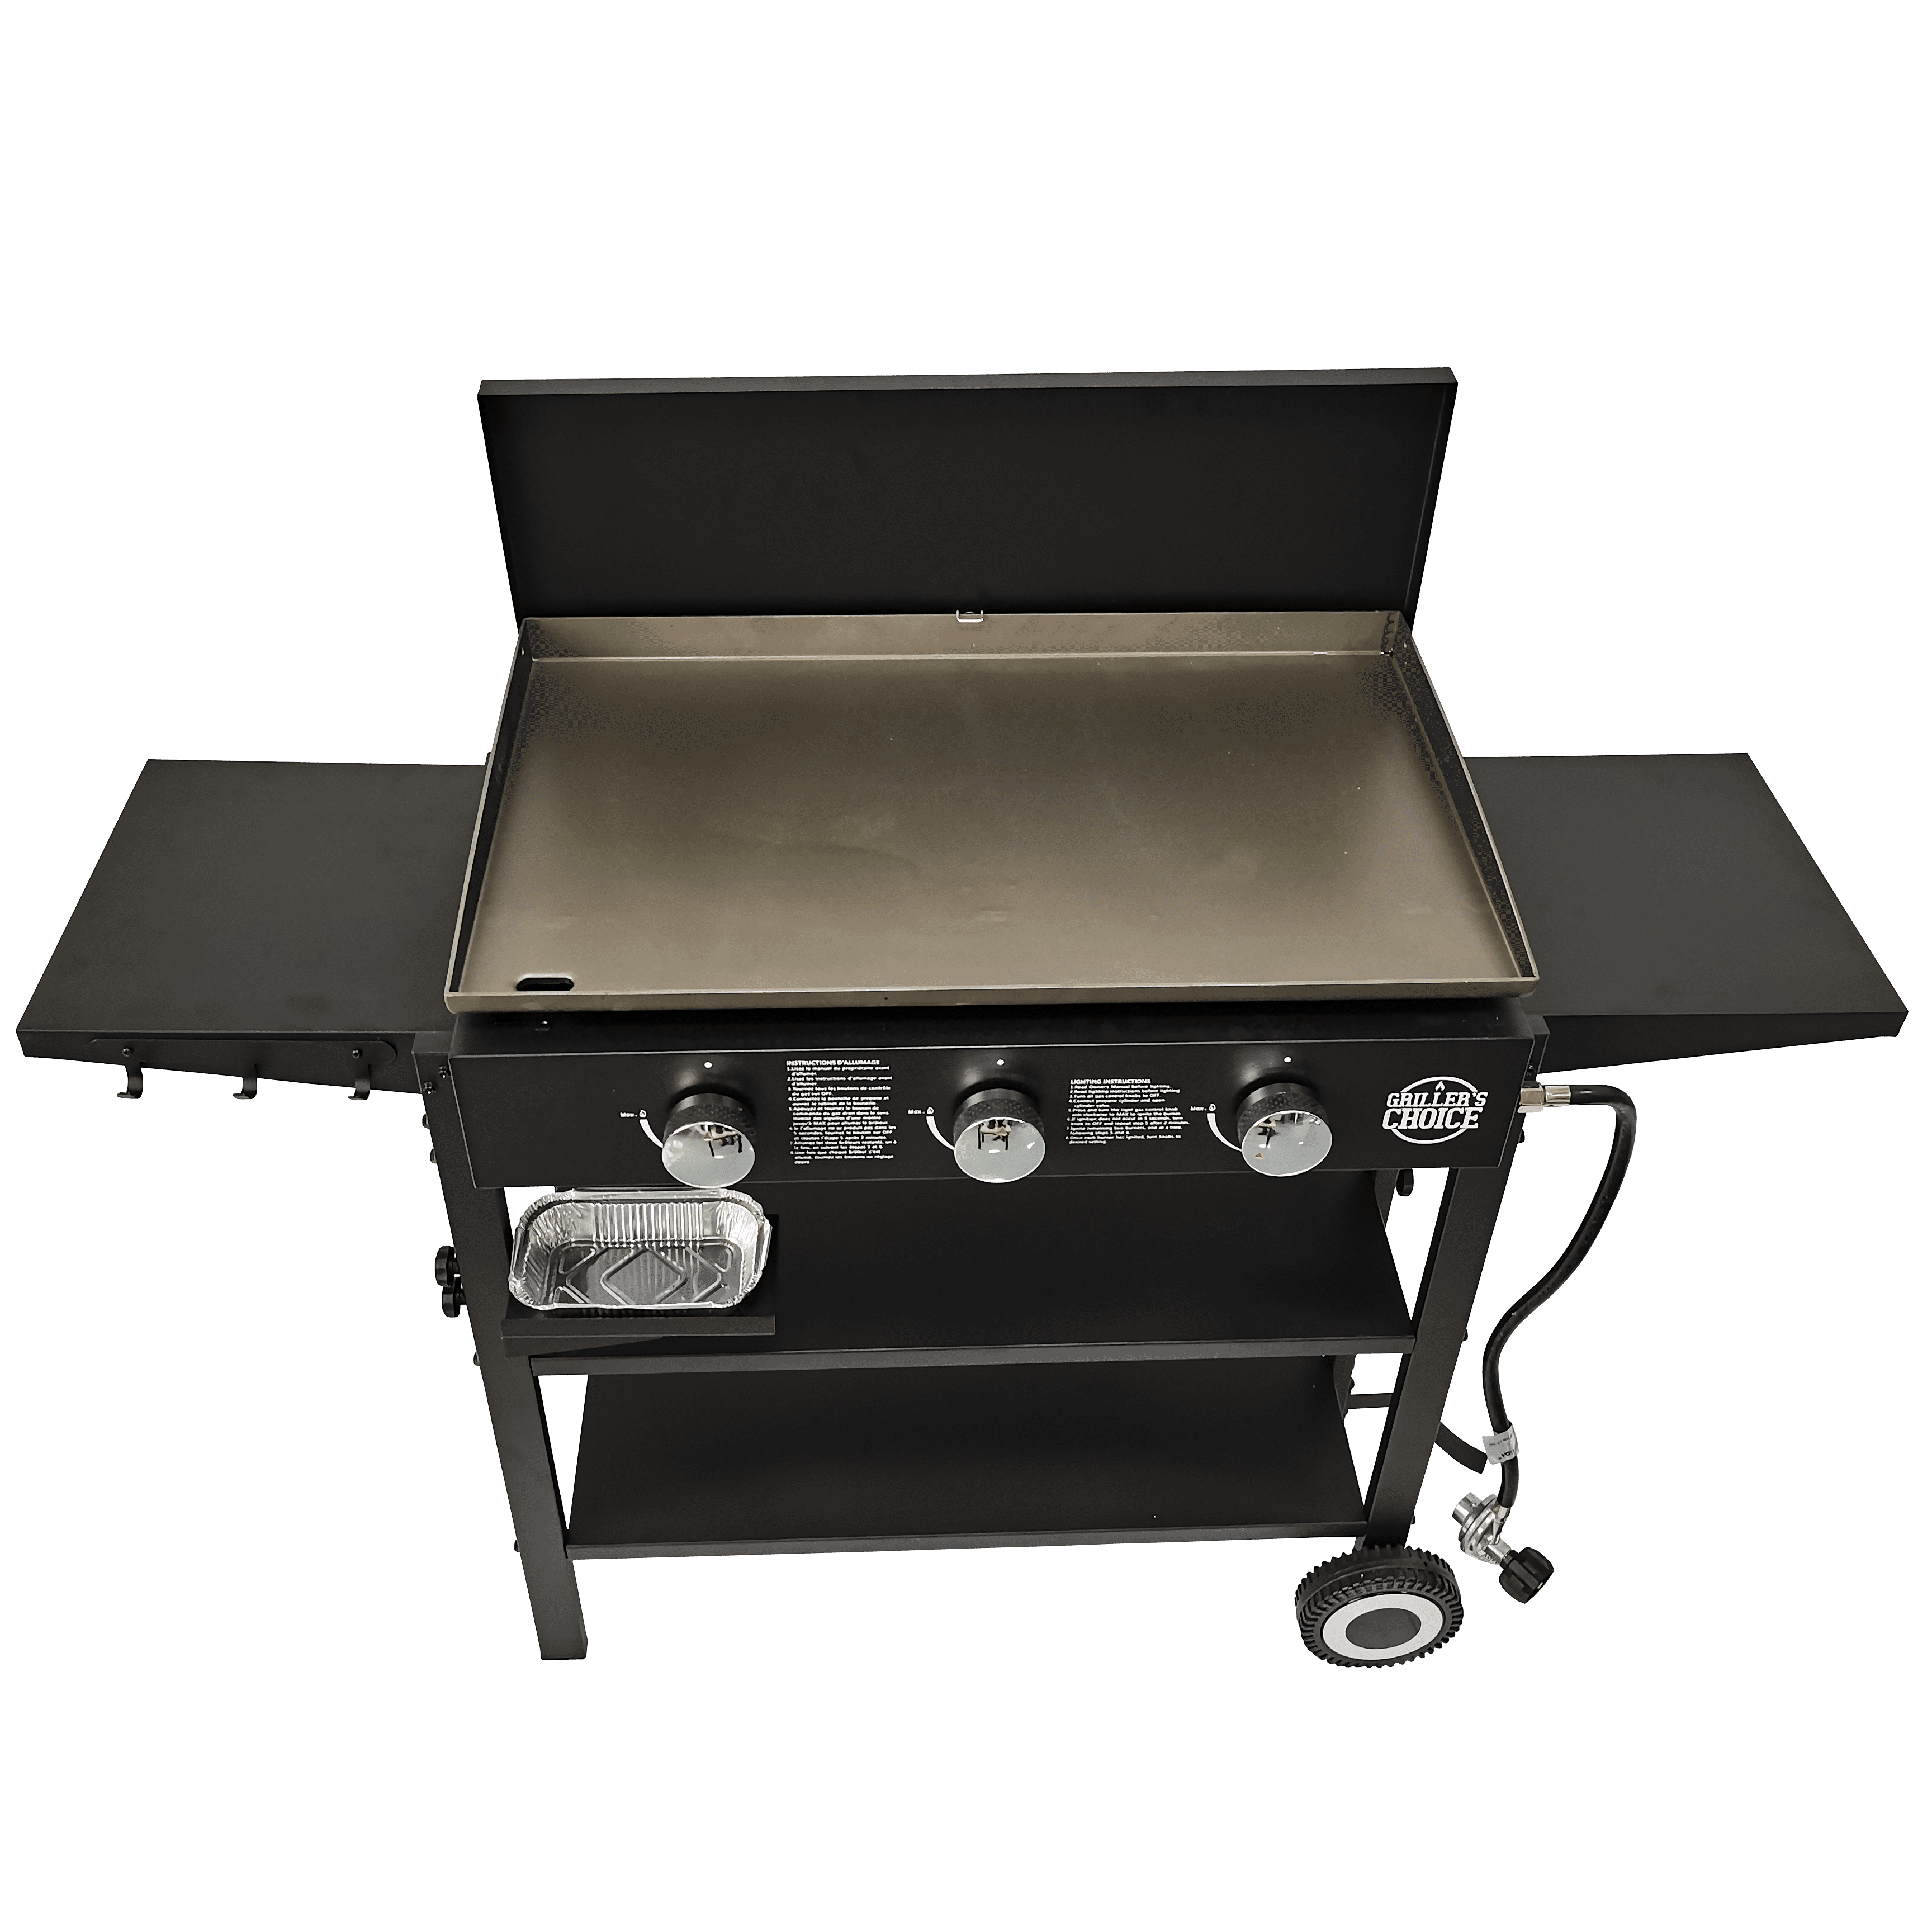 Camp Chef FTG600 4-Burner Liquid Propane Flat Top Grill at